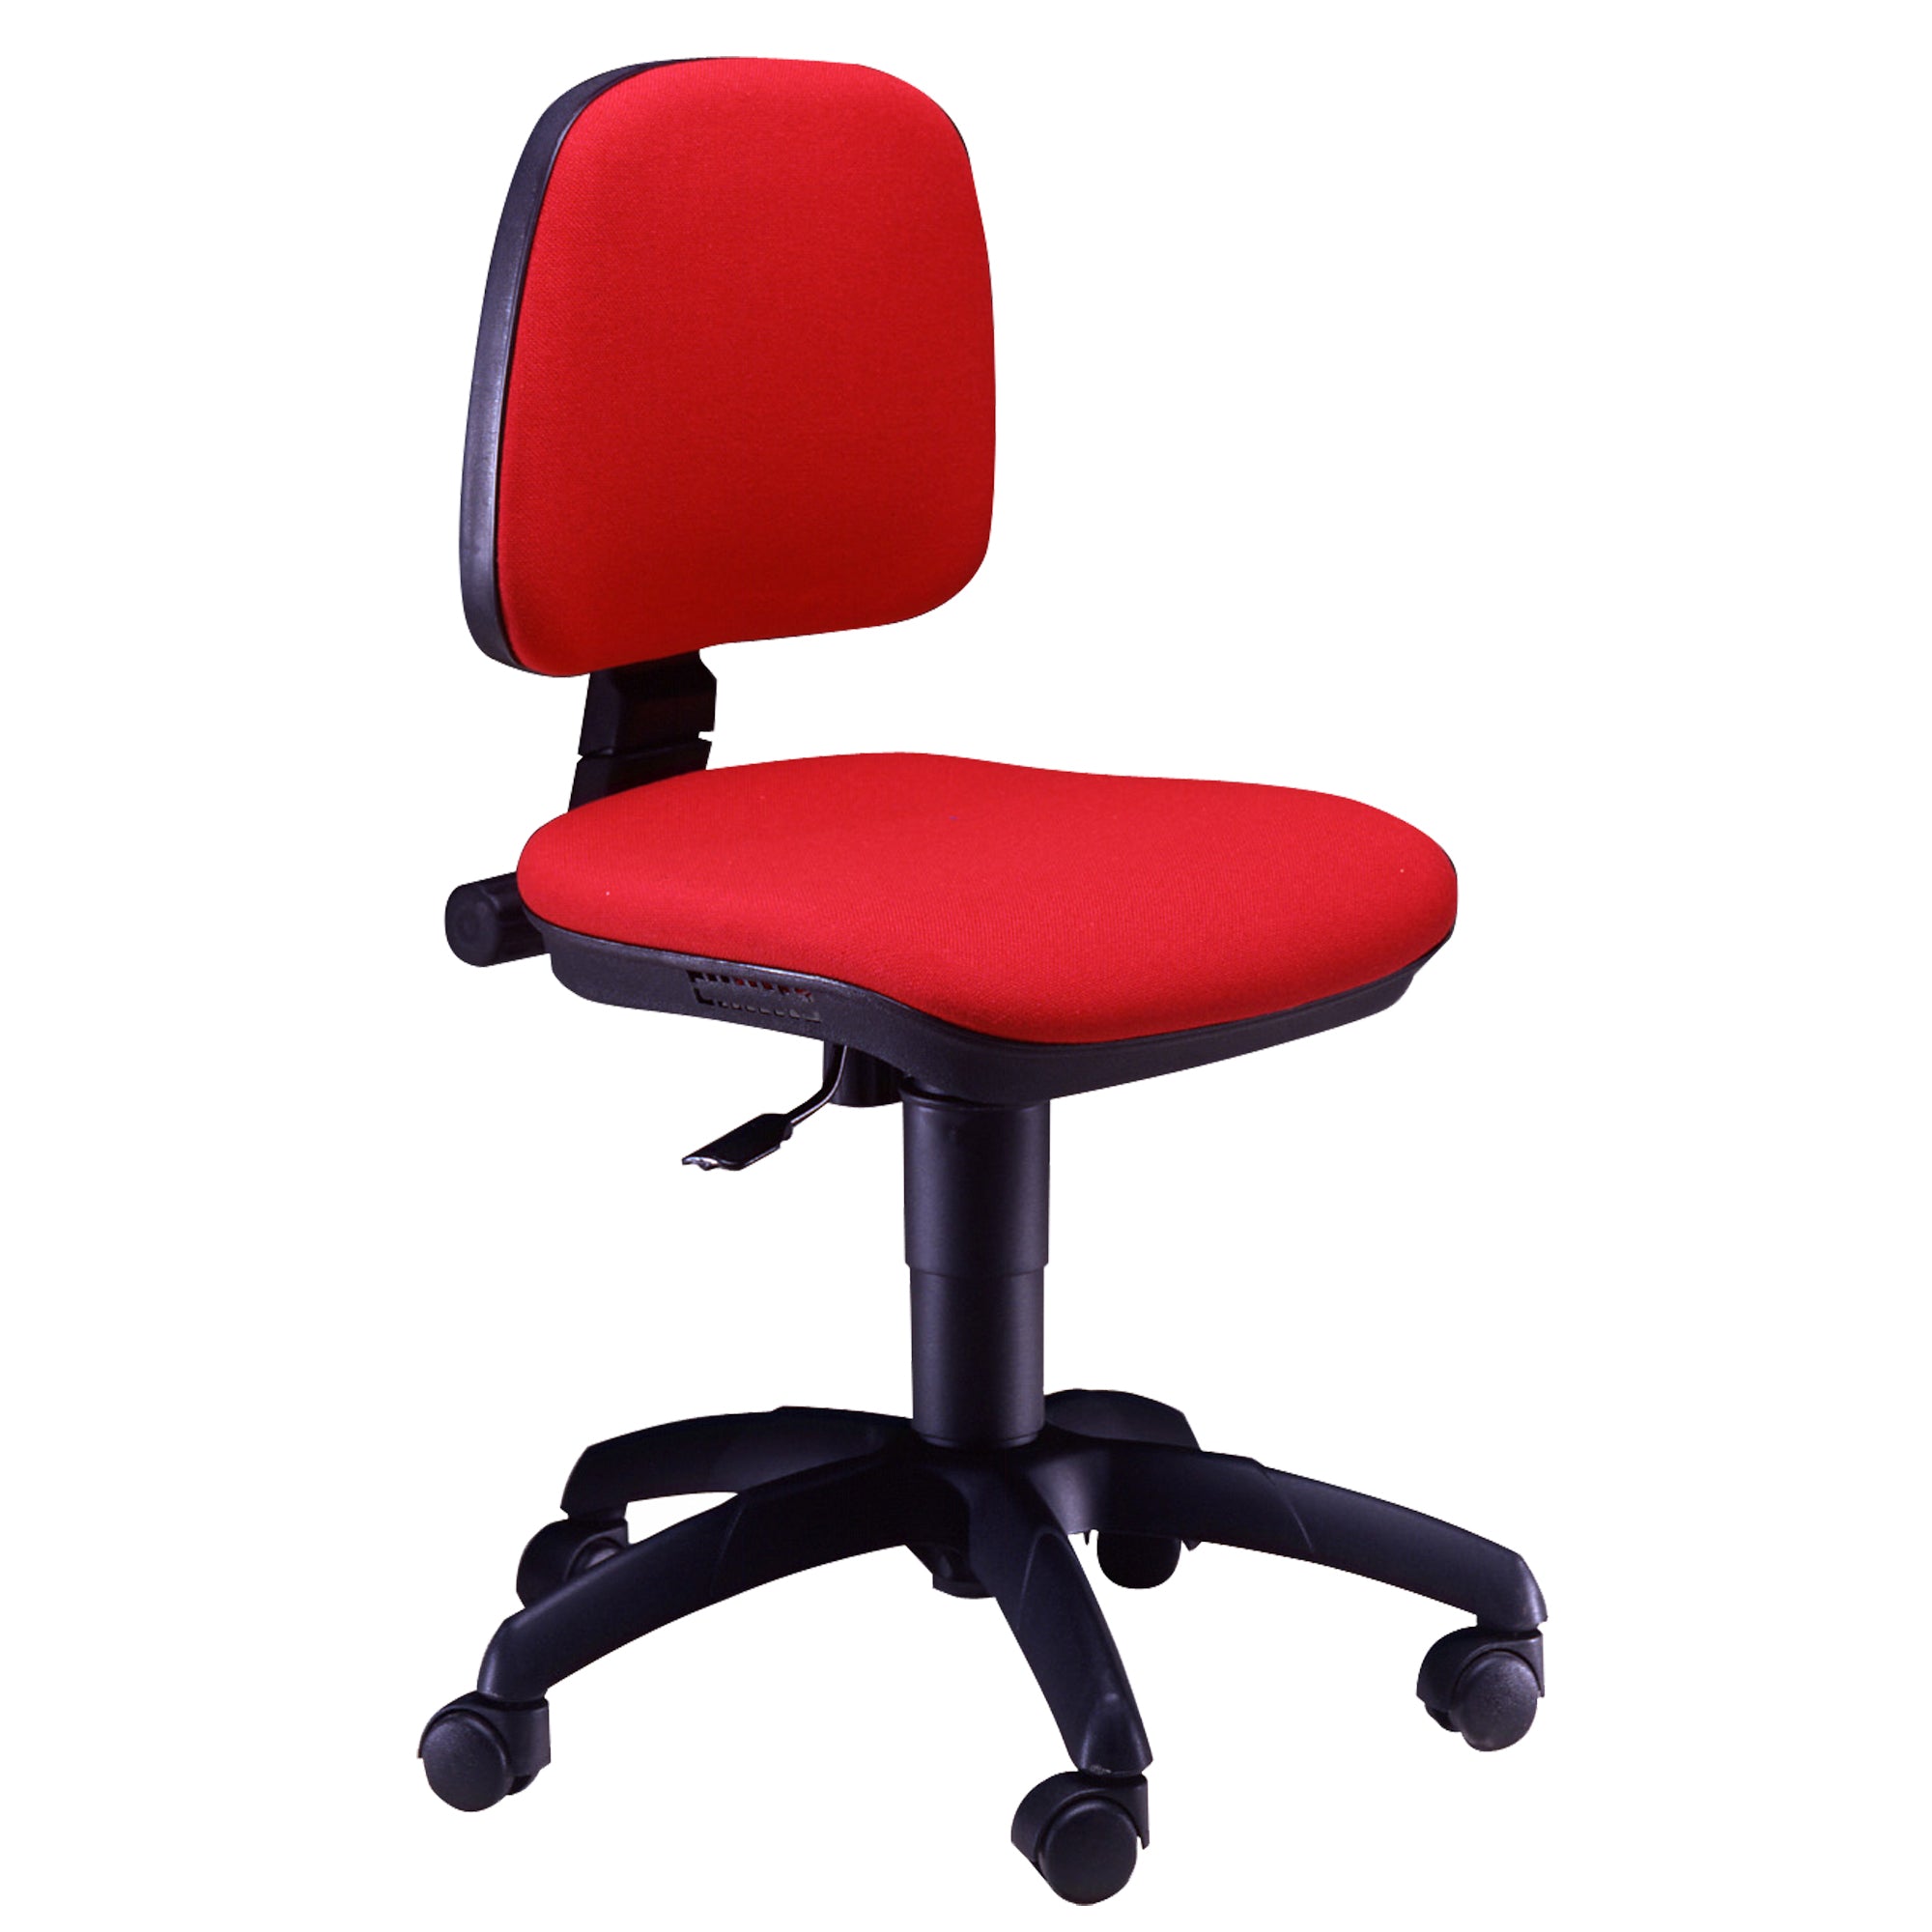 unisit-sedia-operativa-atlas-a41b-rosso-senza-braccioli